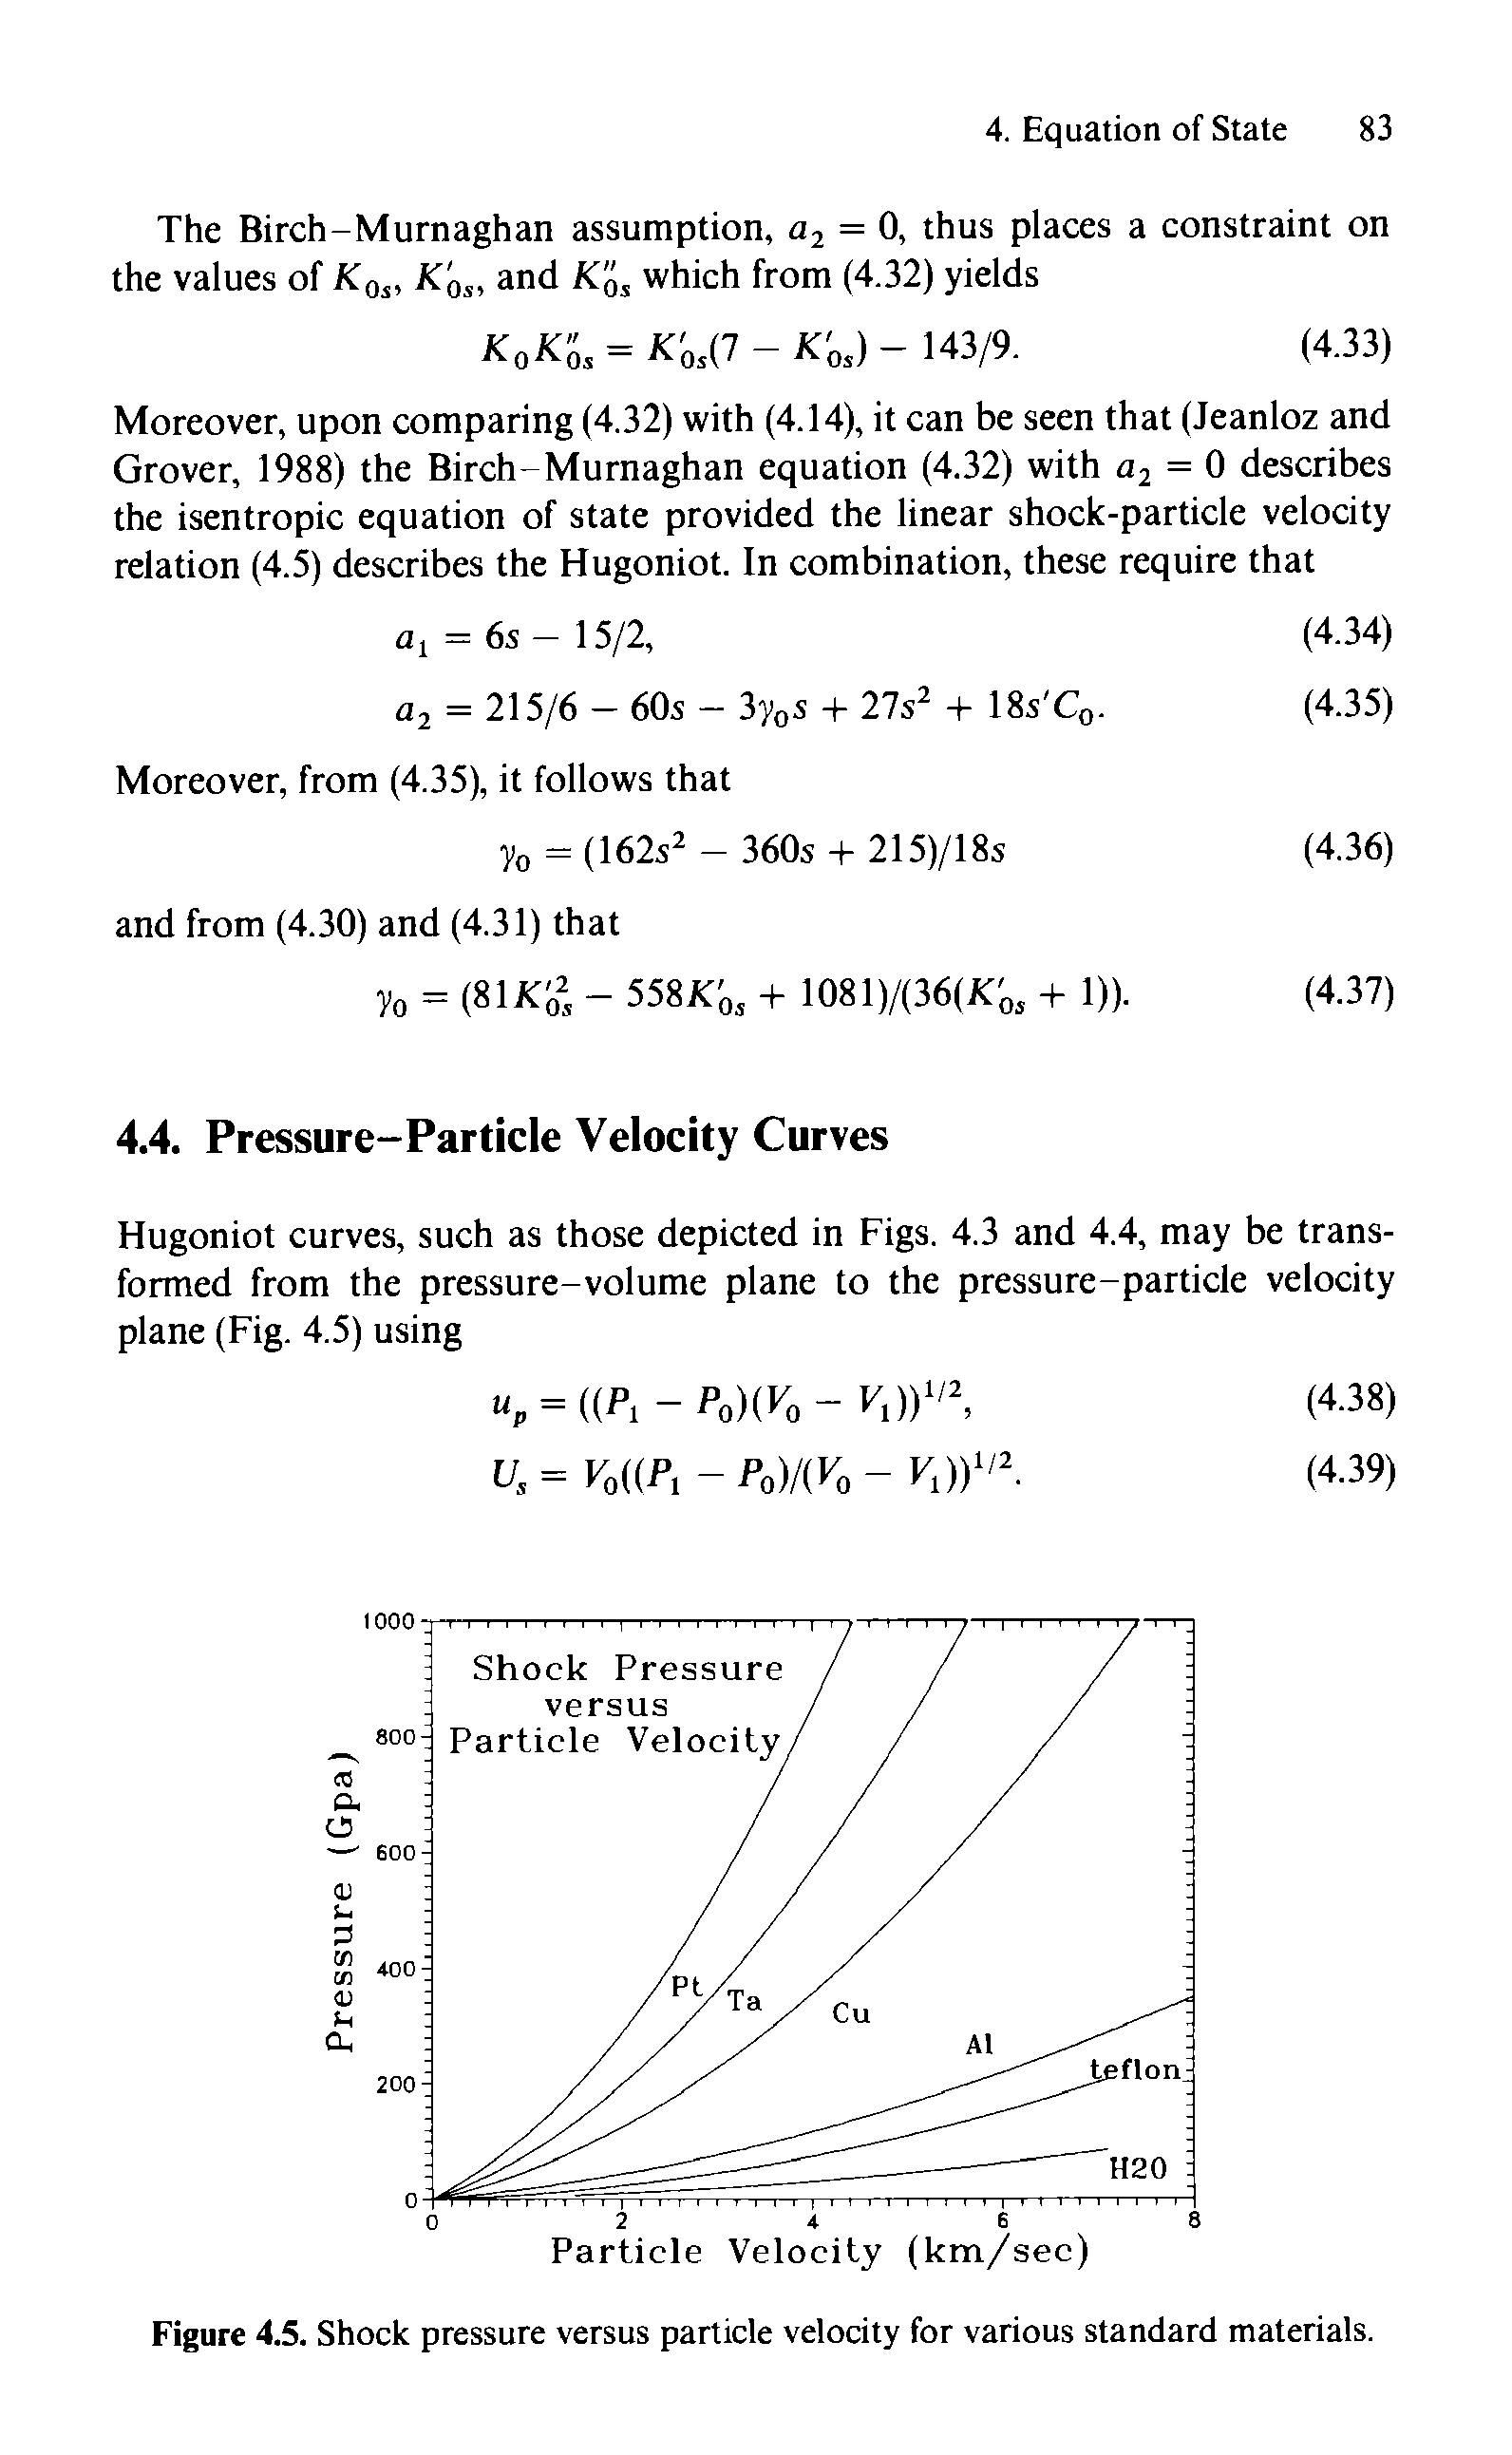 Figure 4.5. Shock pressure versus particle velocity for various standard materials.